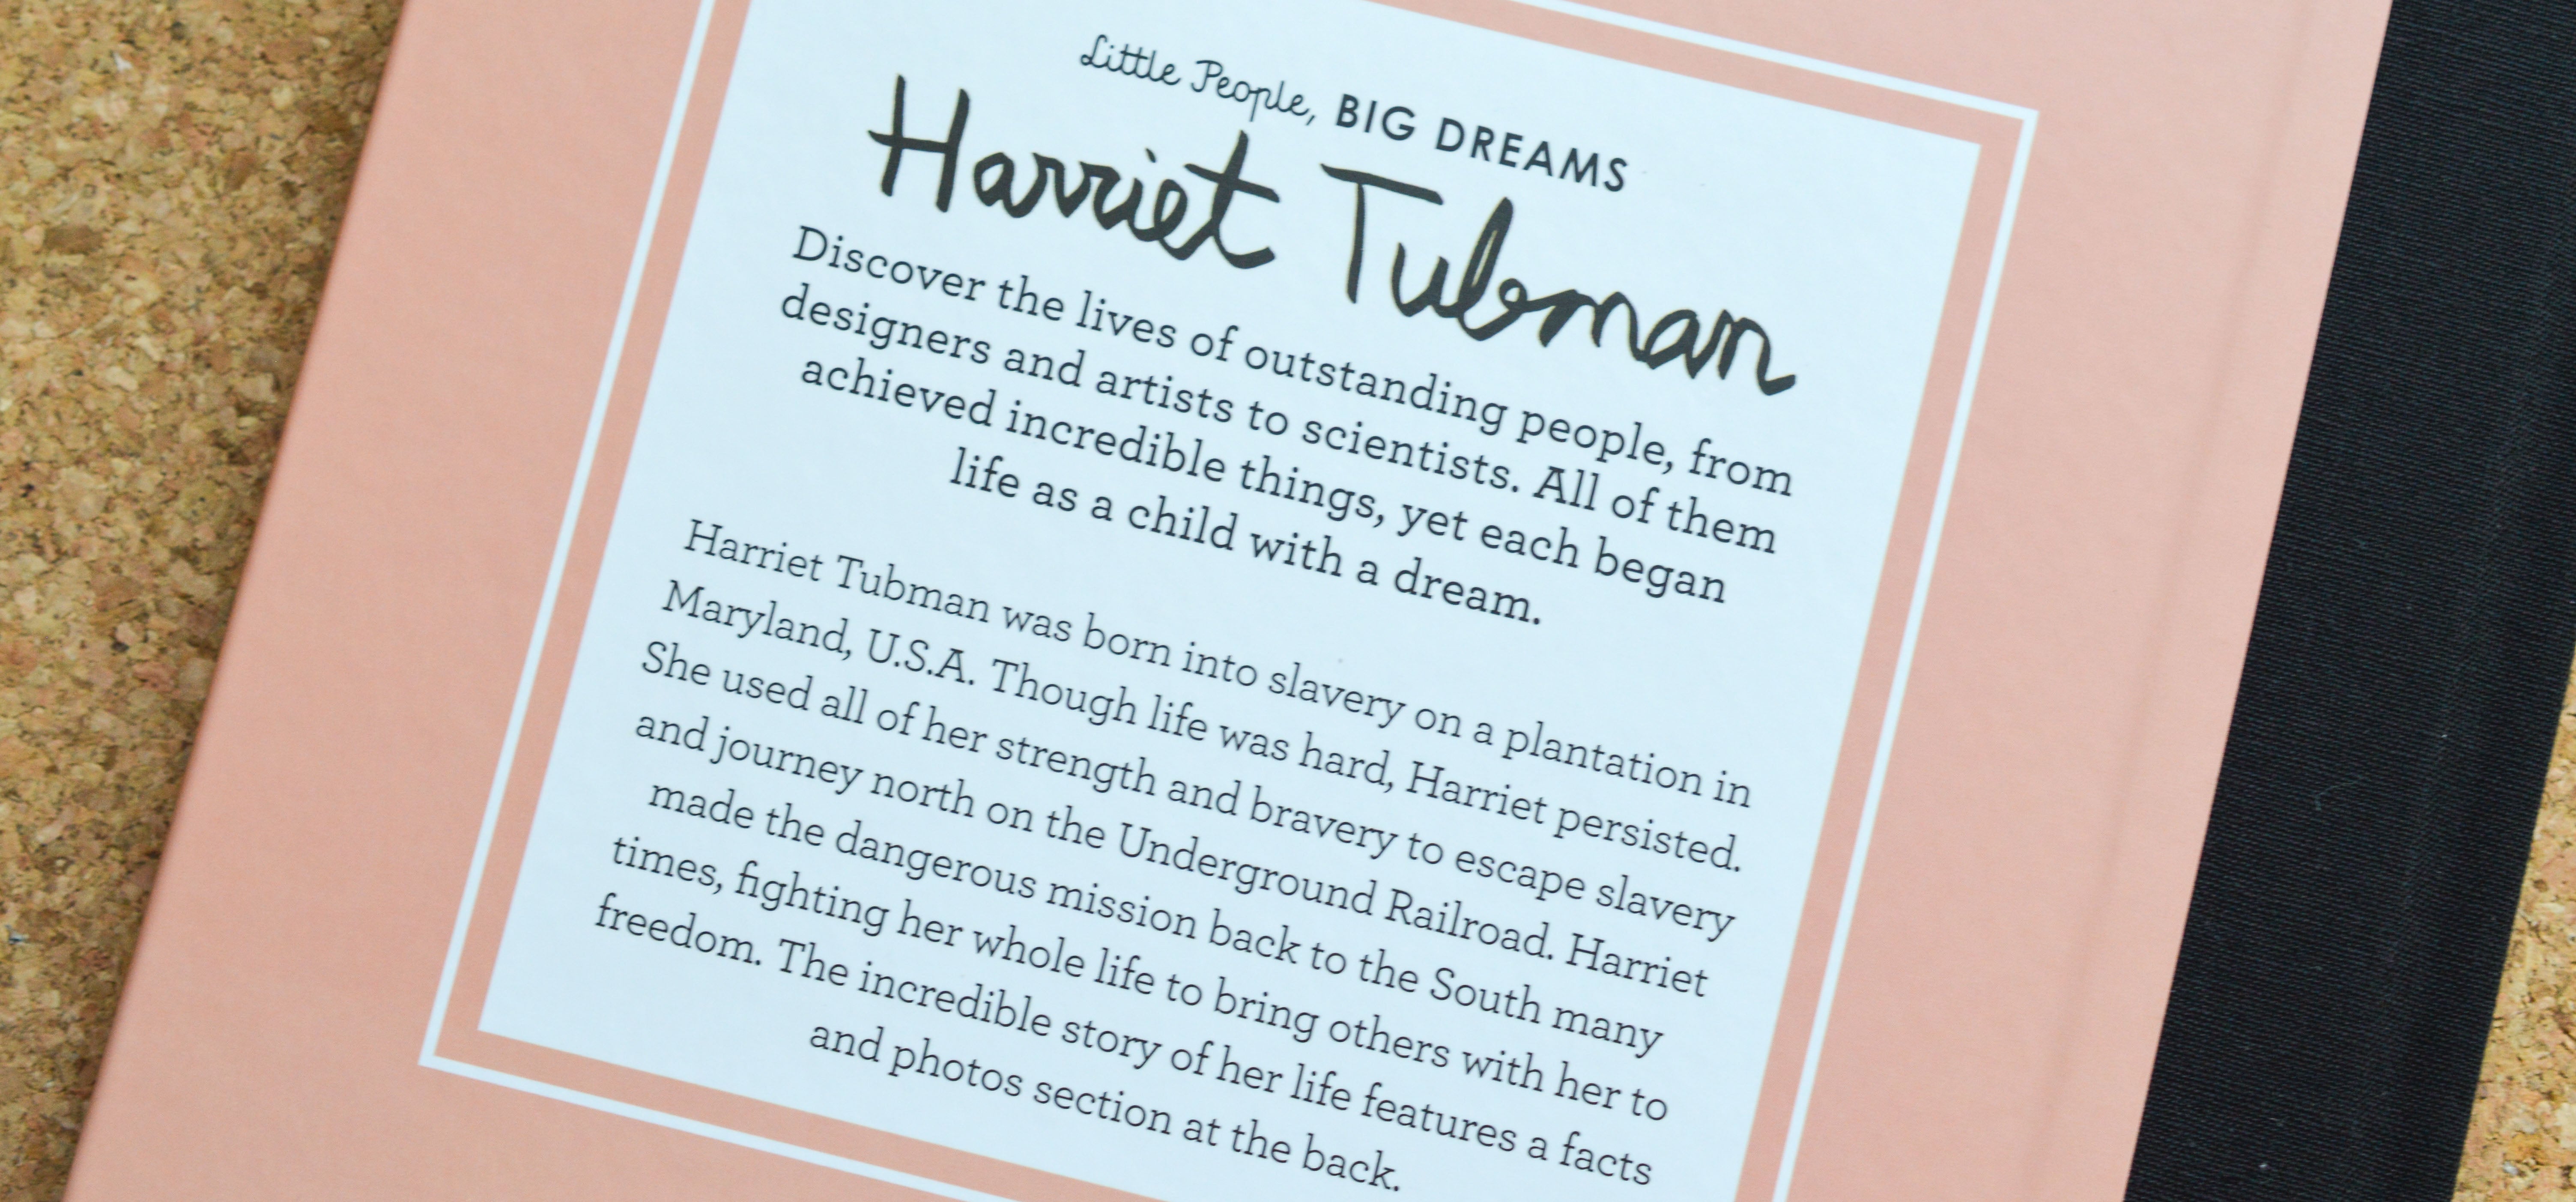 Little People Big Dreams - Harriet Tubman